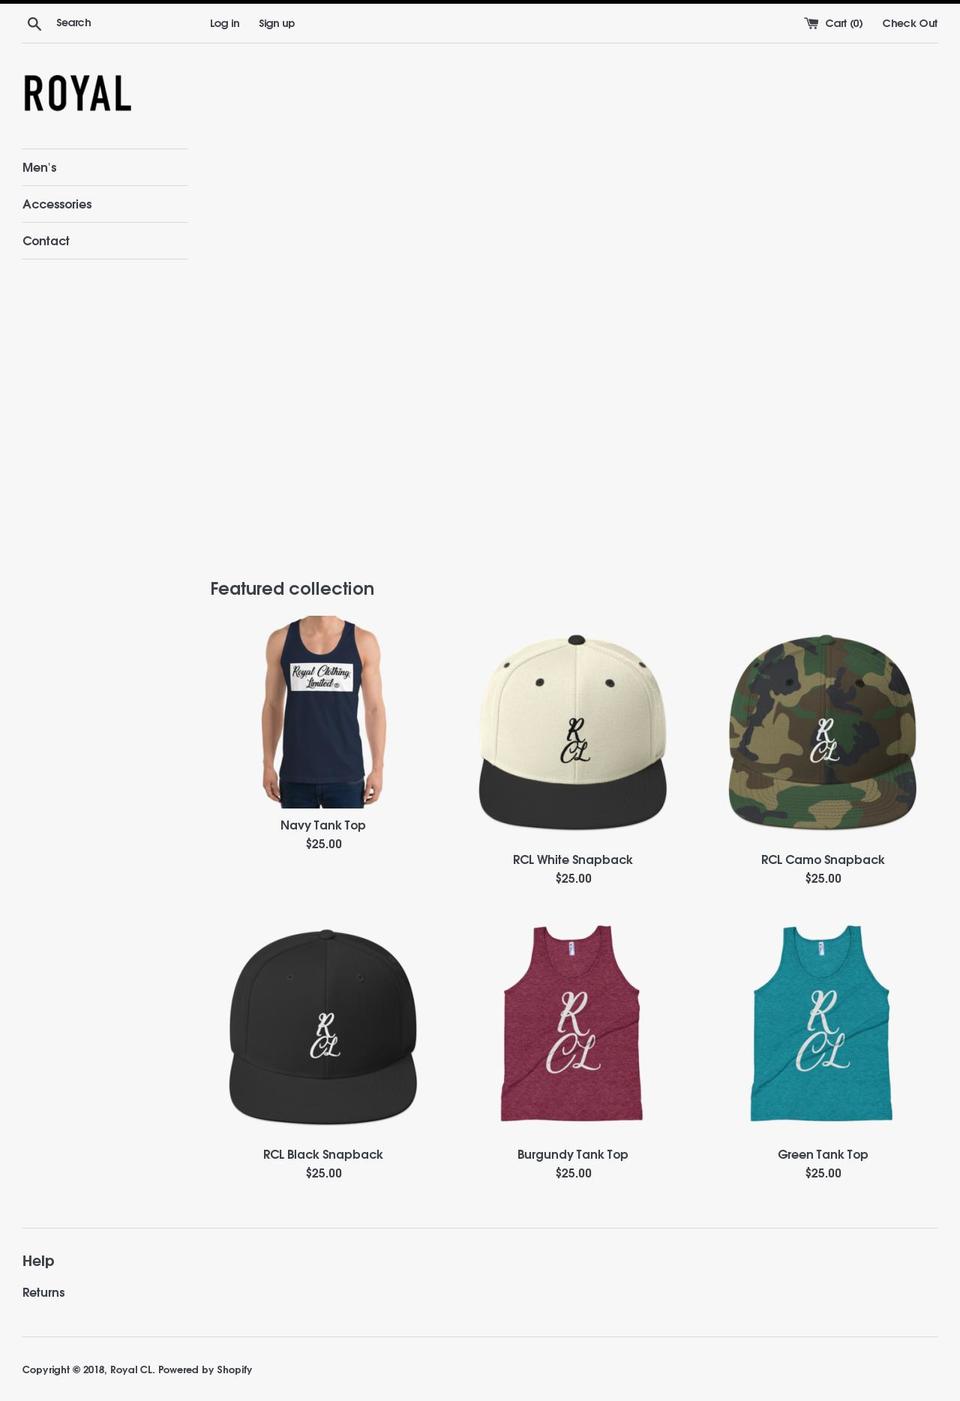 royal.clothing shopify website screenshot